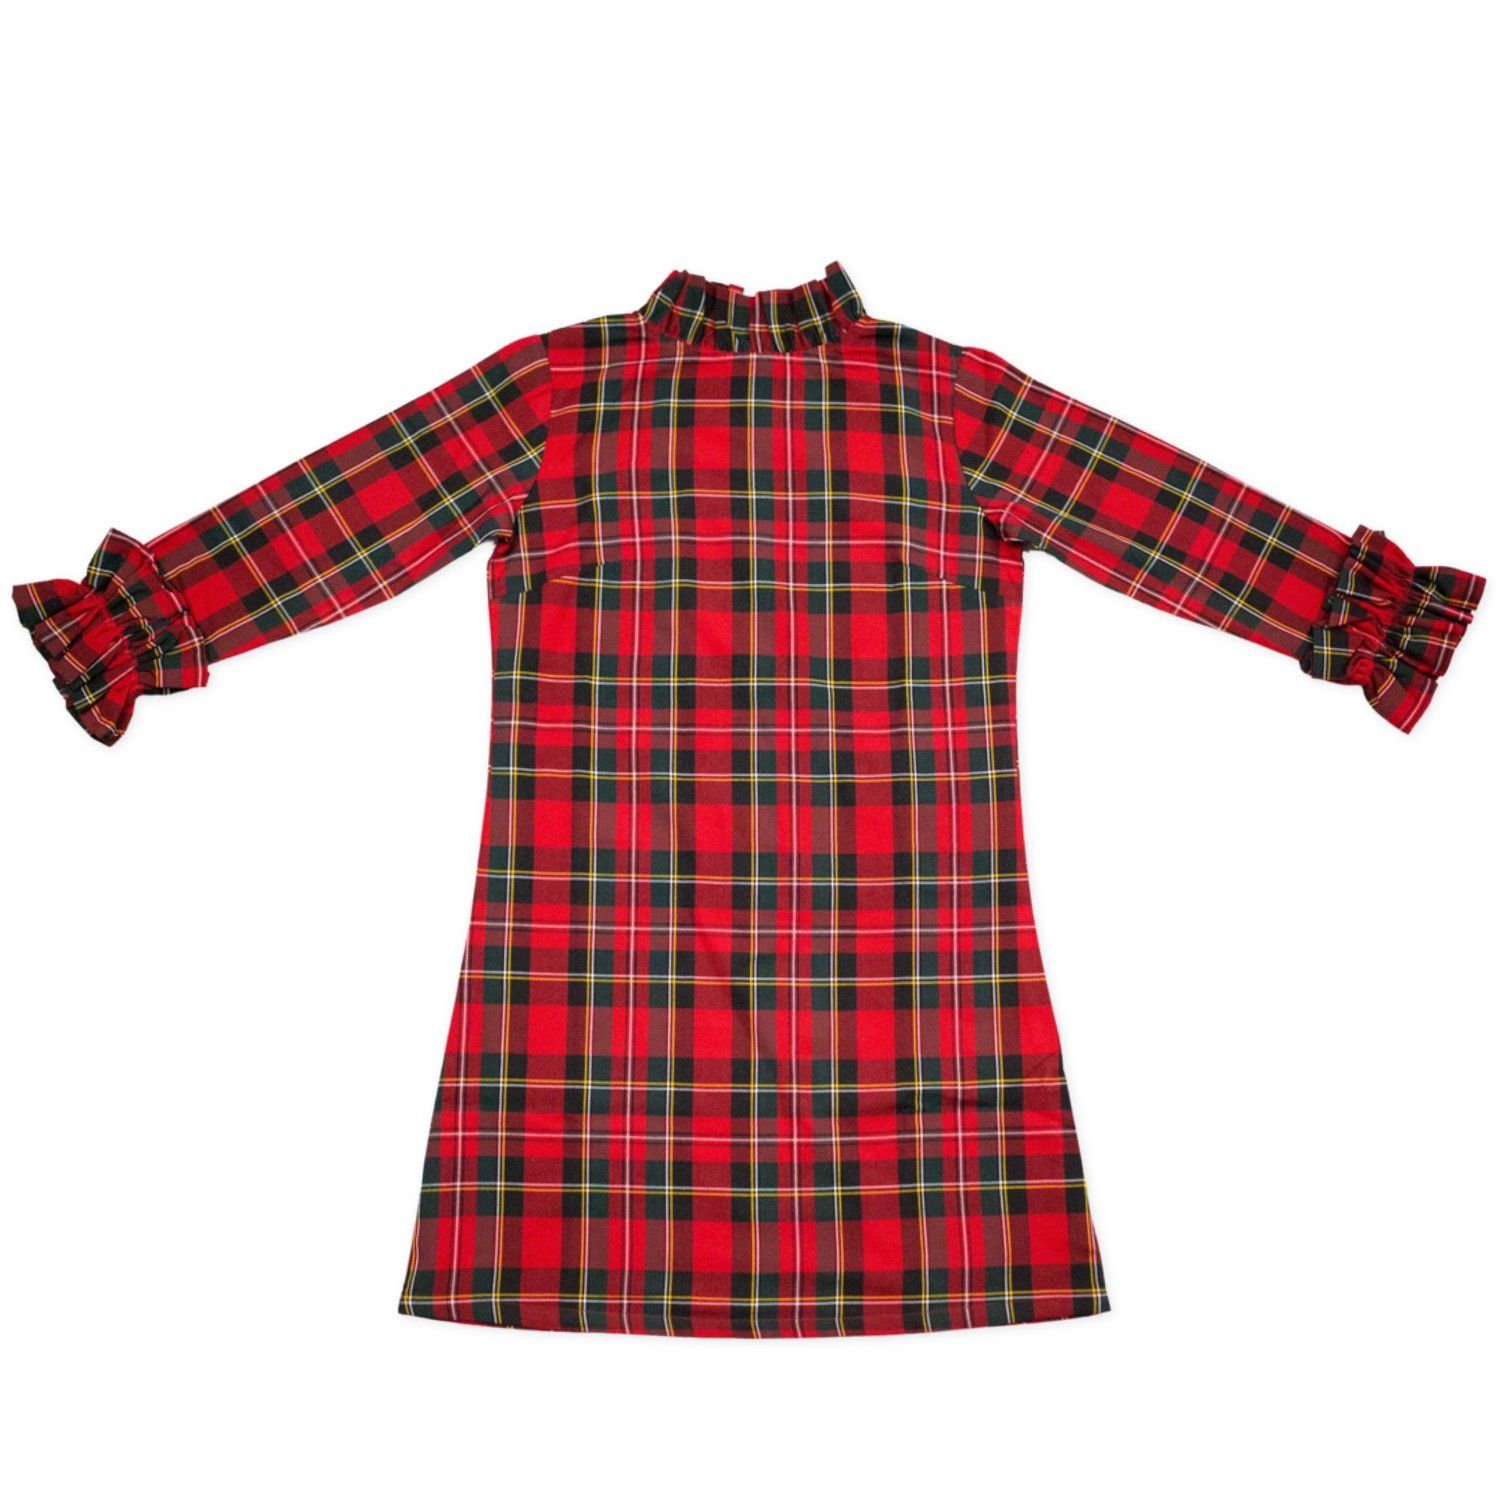 Sarah Jane Shift Dress in Red Plaid — Elizabeth Wilson | Elizabeth Wilson Designs